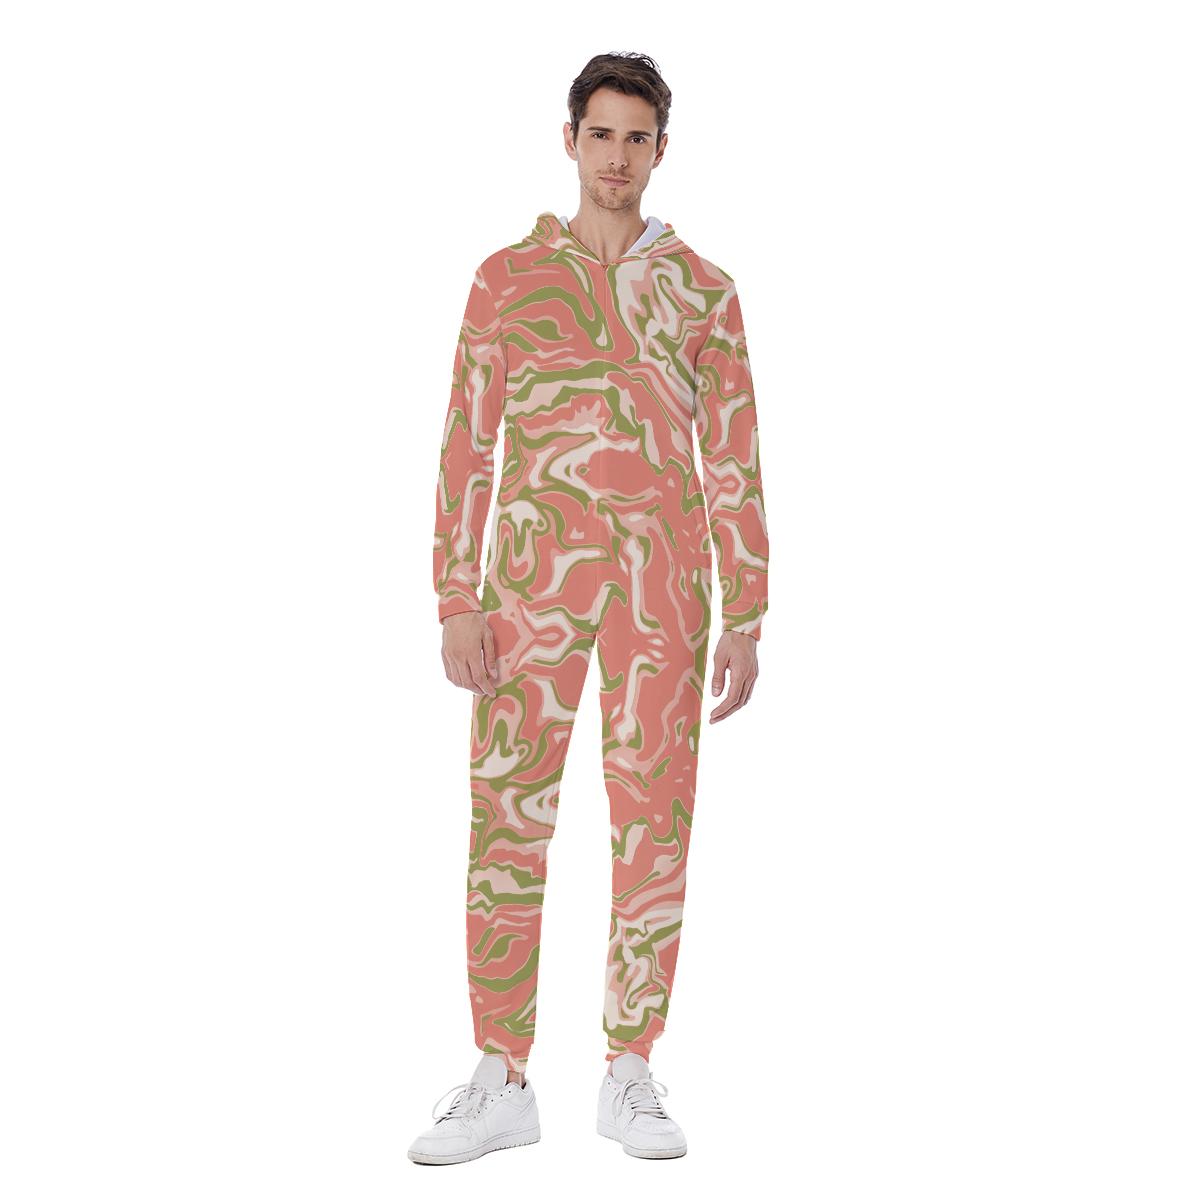 Coral Pink Camo Camouflage Style Print Men's Hooded Jumpsuit, Urban Camo Liquid Men's Jumpsuit